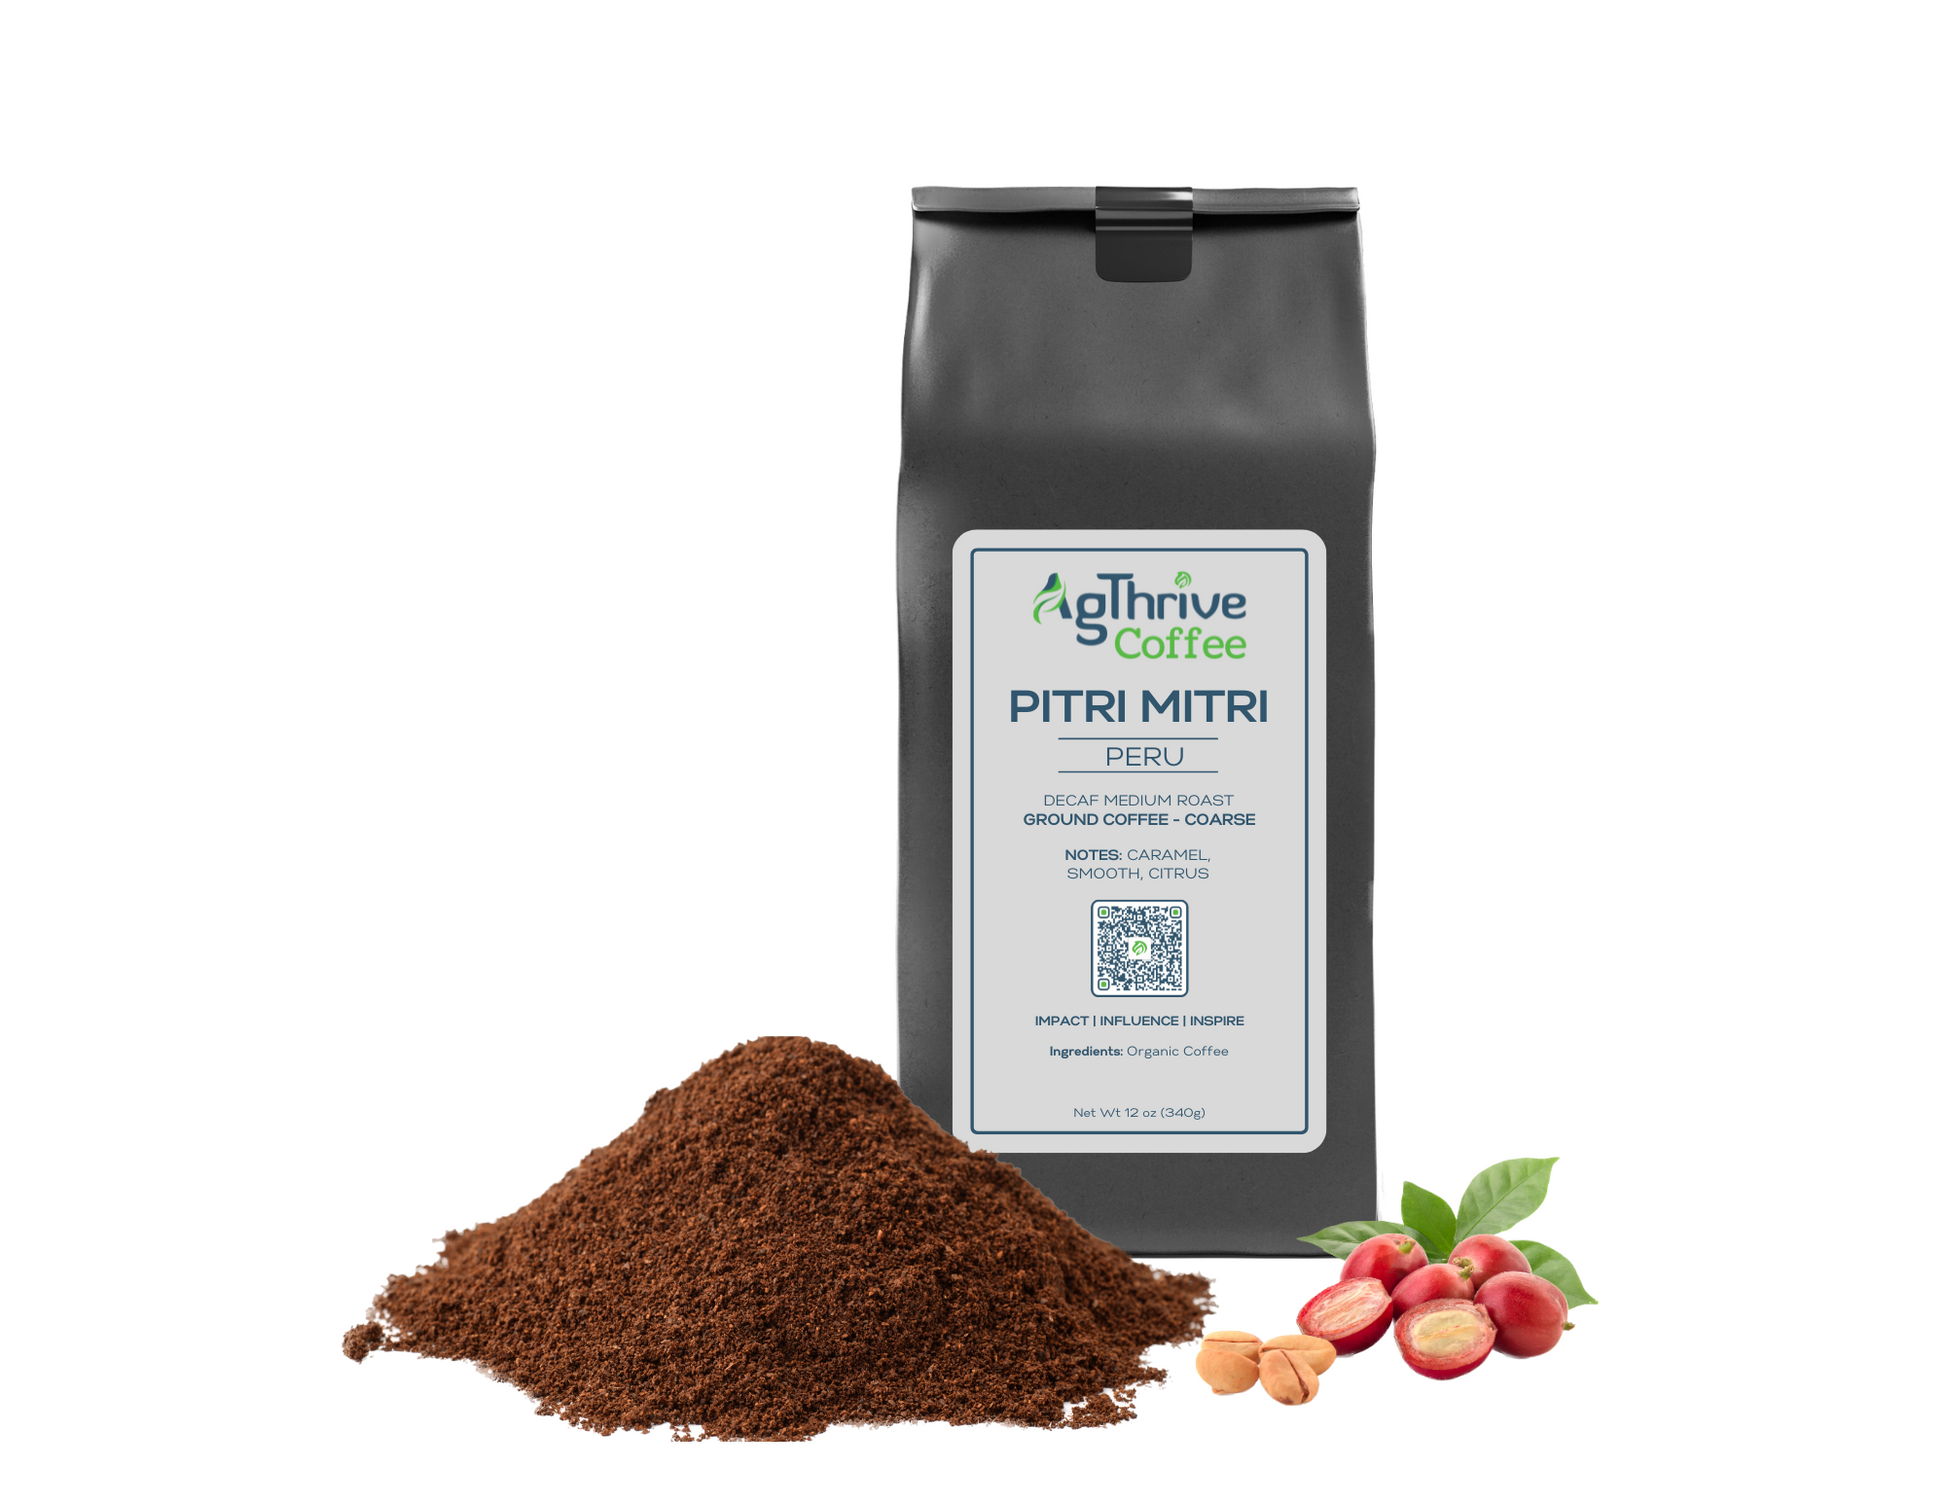 PITRI MITI (DECAF) - Premium Peruvian Decaffeinated Single Origin Coffee Coarse